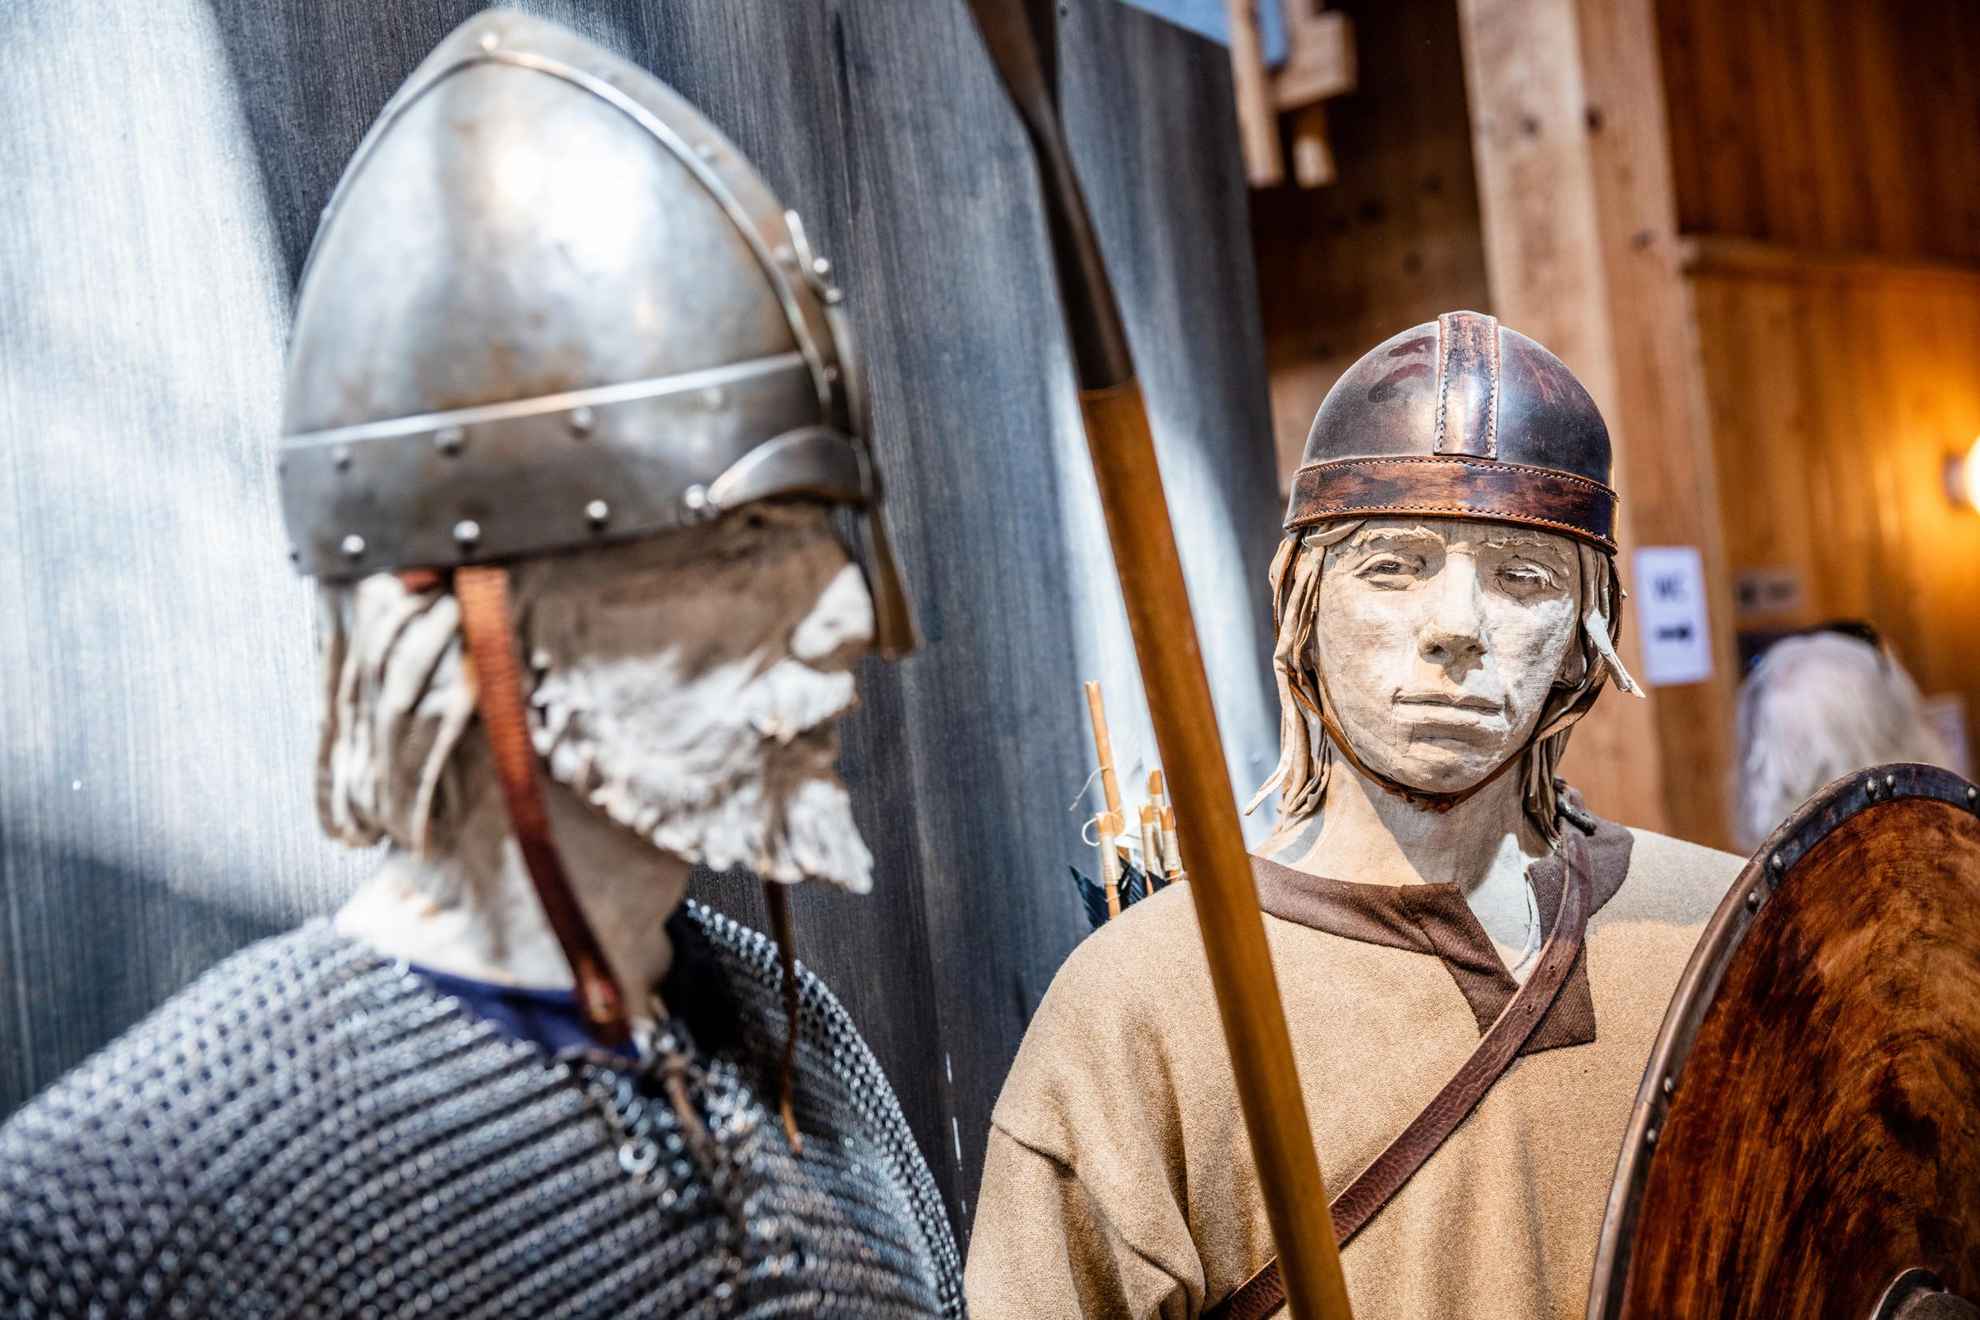 Viking exhibit at Birka Viking Village